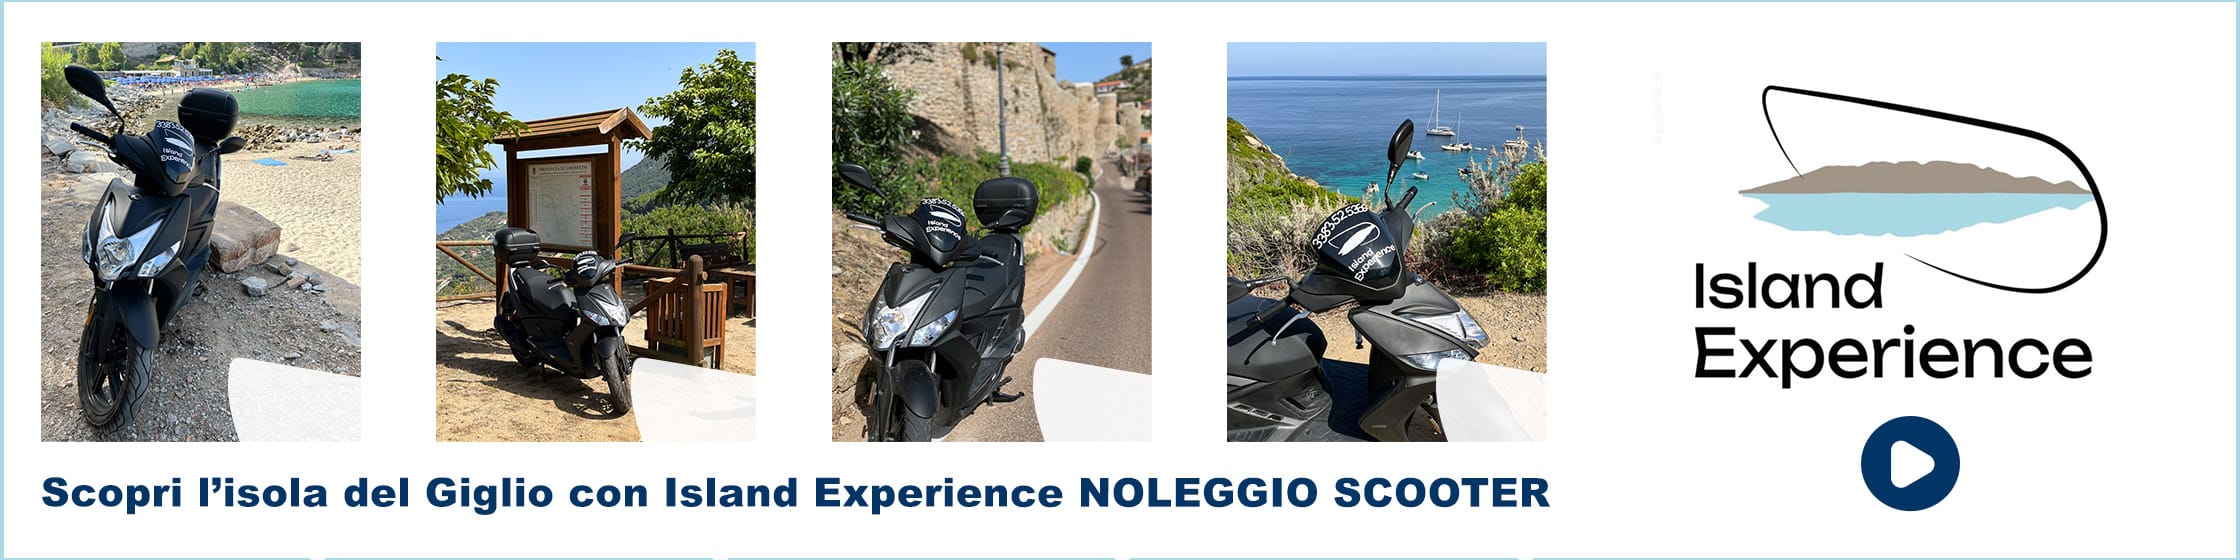 Banner Island Experience Noleggio Scooter